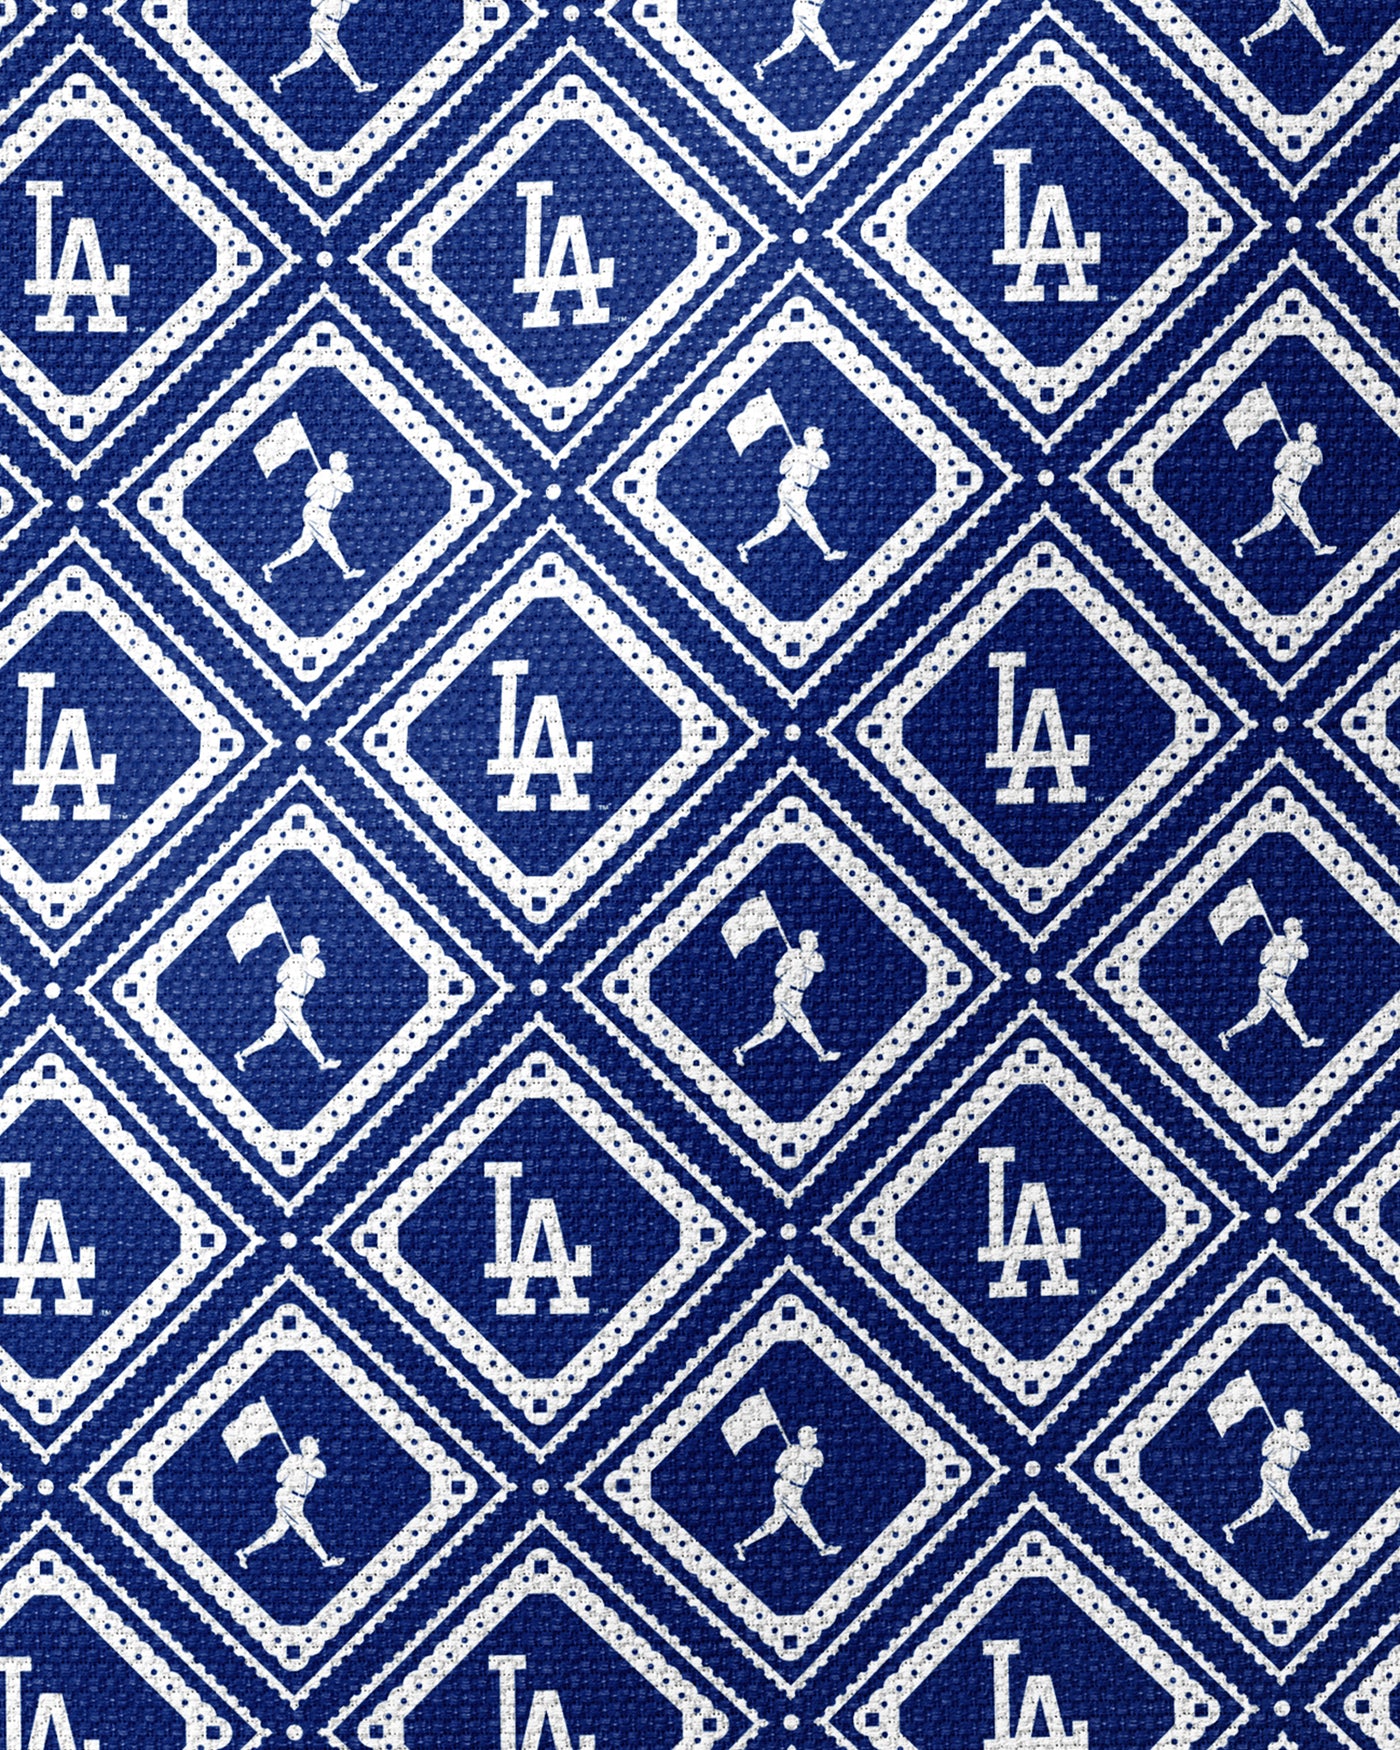 Cathy Zip Tote - Los Angeles Dodgers